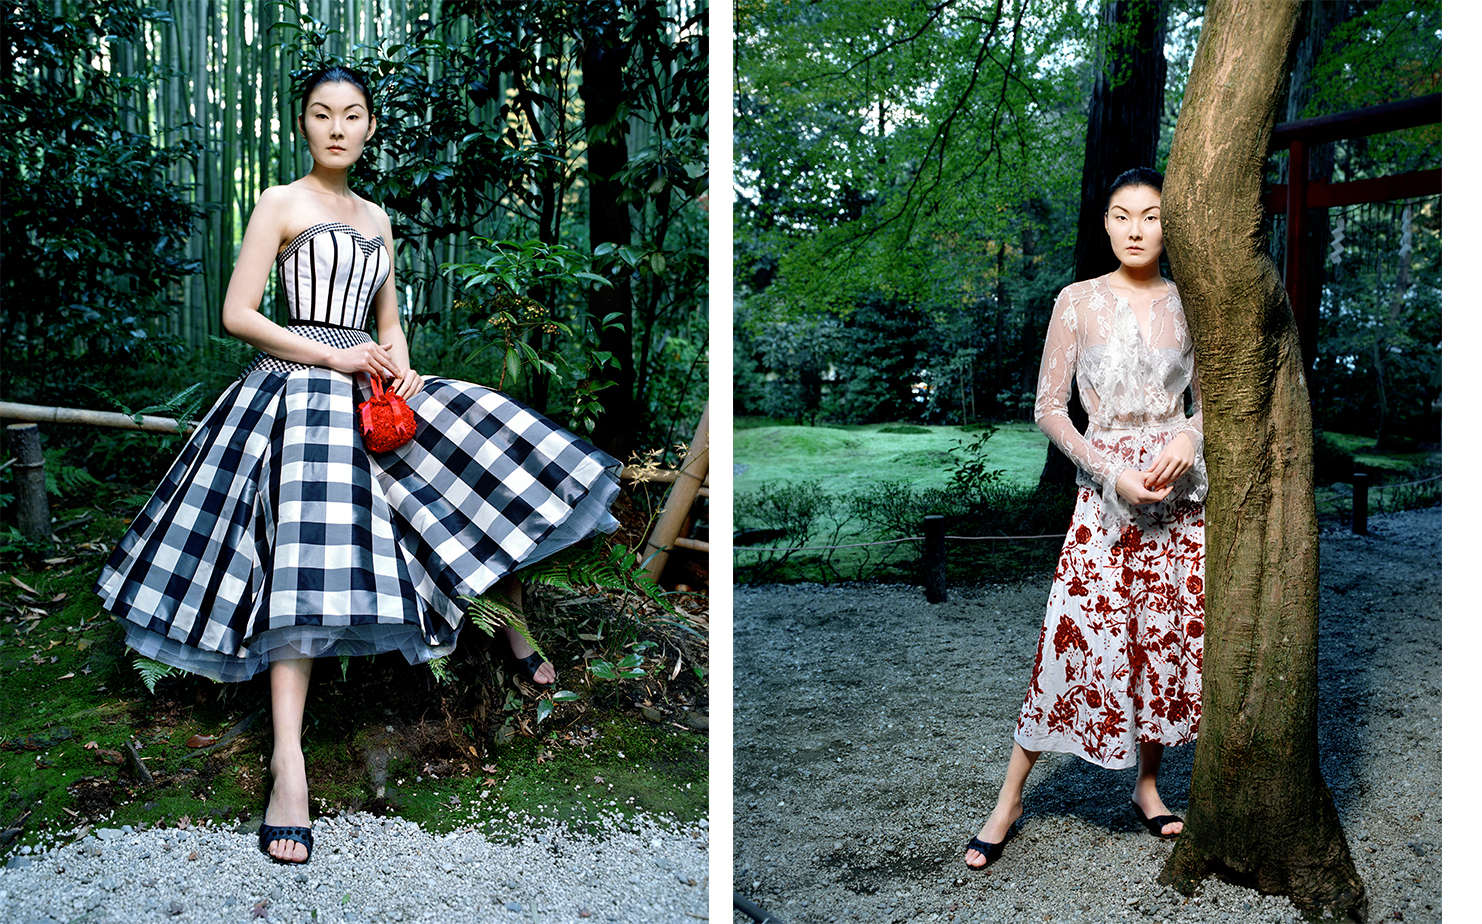   Vogue Japan DRESSING UP AND GOING TO KYOTO   FASHION EDITOR Tiina Laakkonen MAKE UP Fulvia Farolfi 